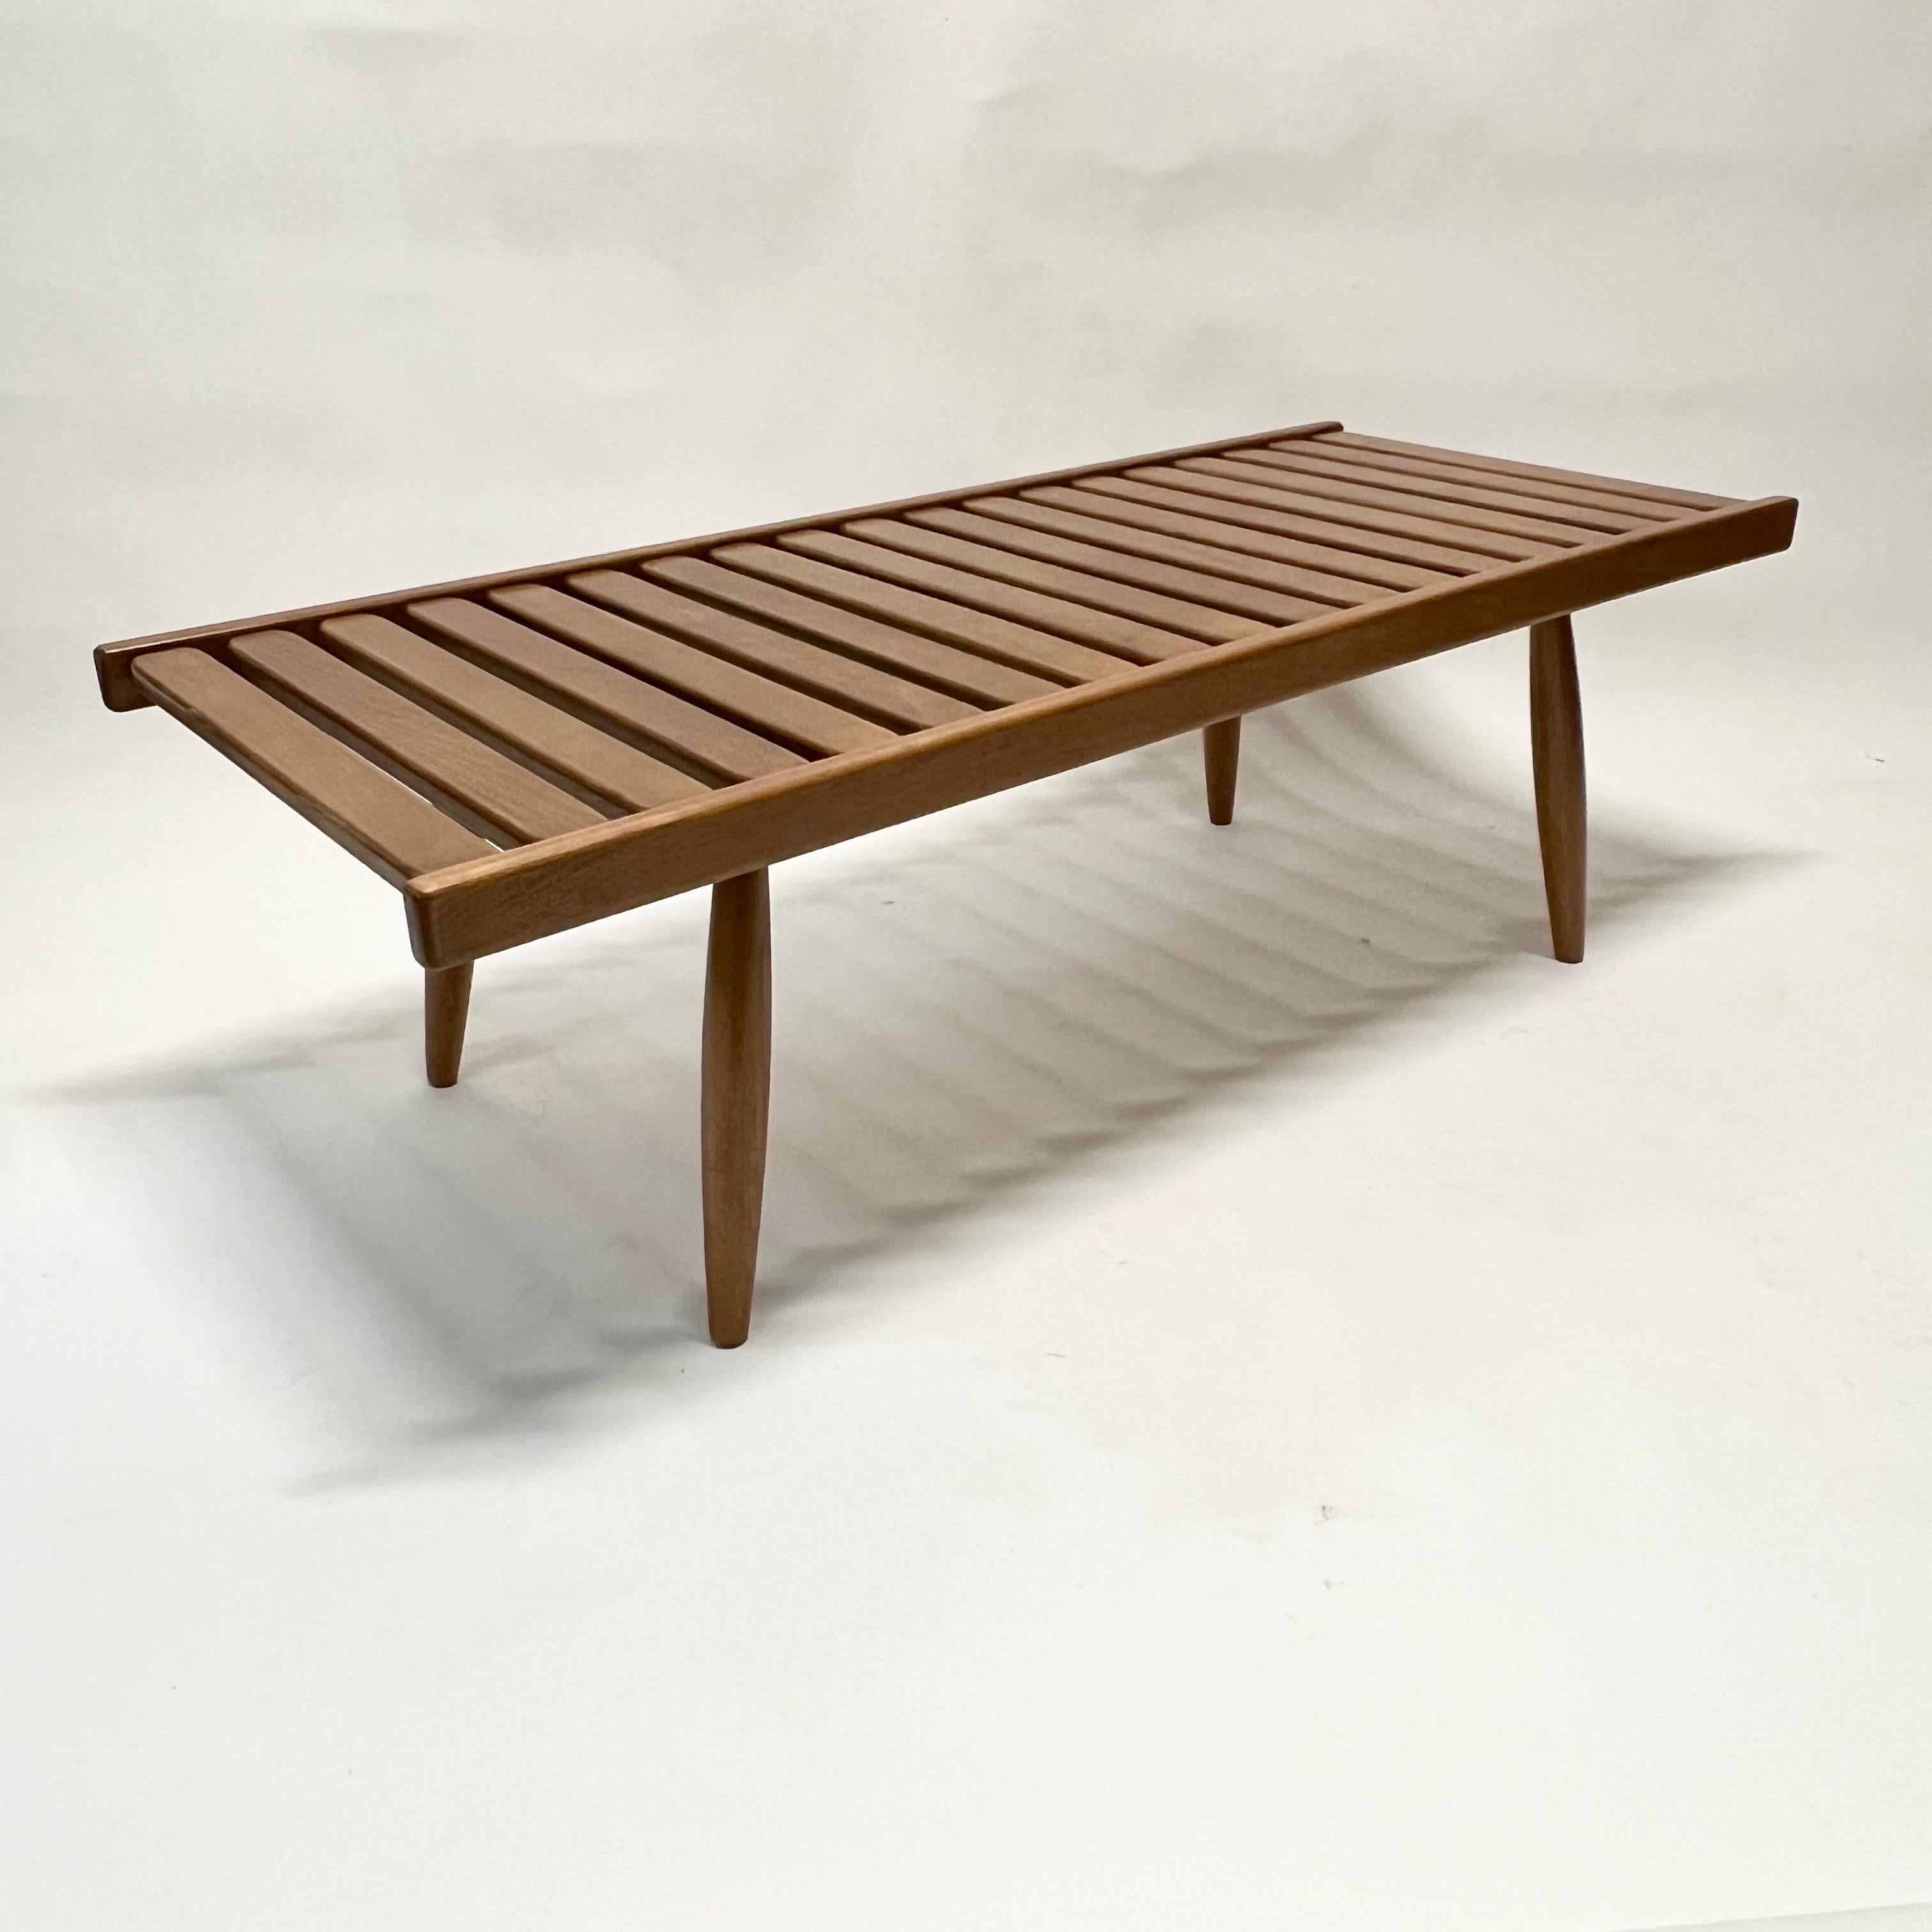 Vintage Japanese Wood Slat Coffee Table c1960s For Sale 2